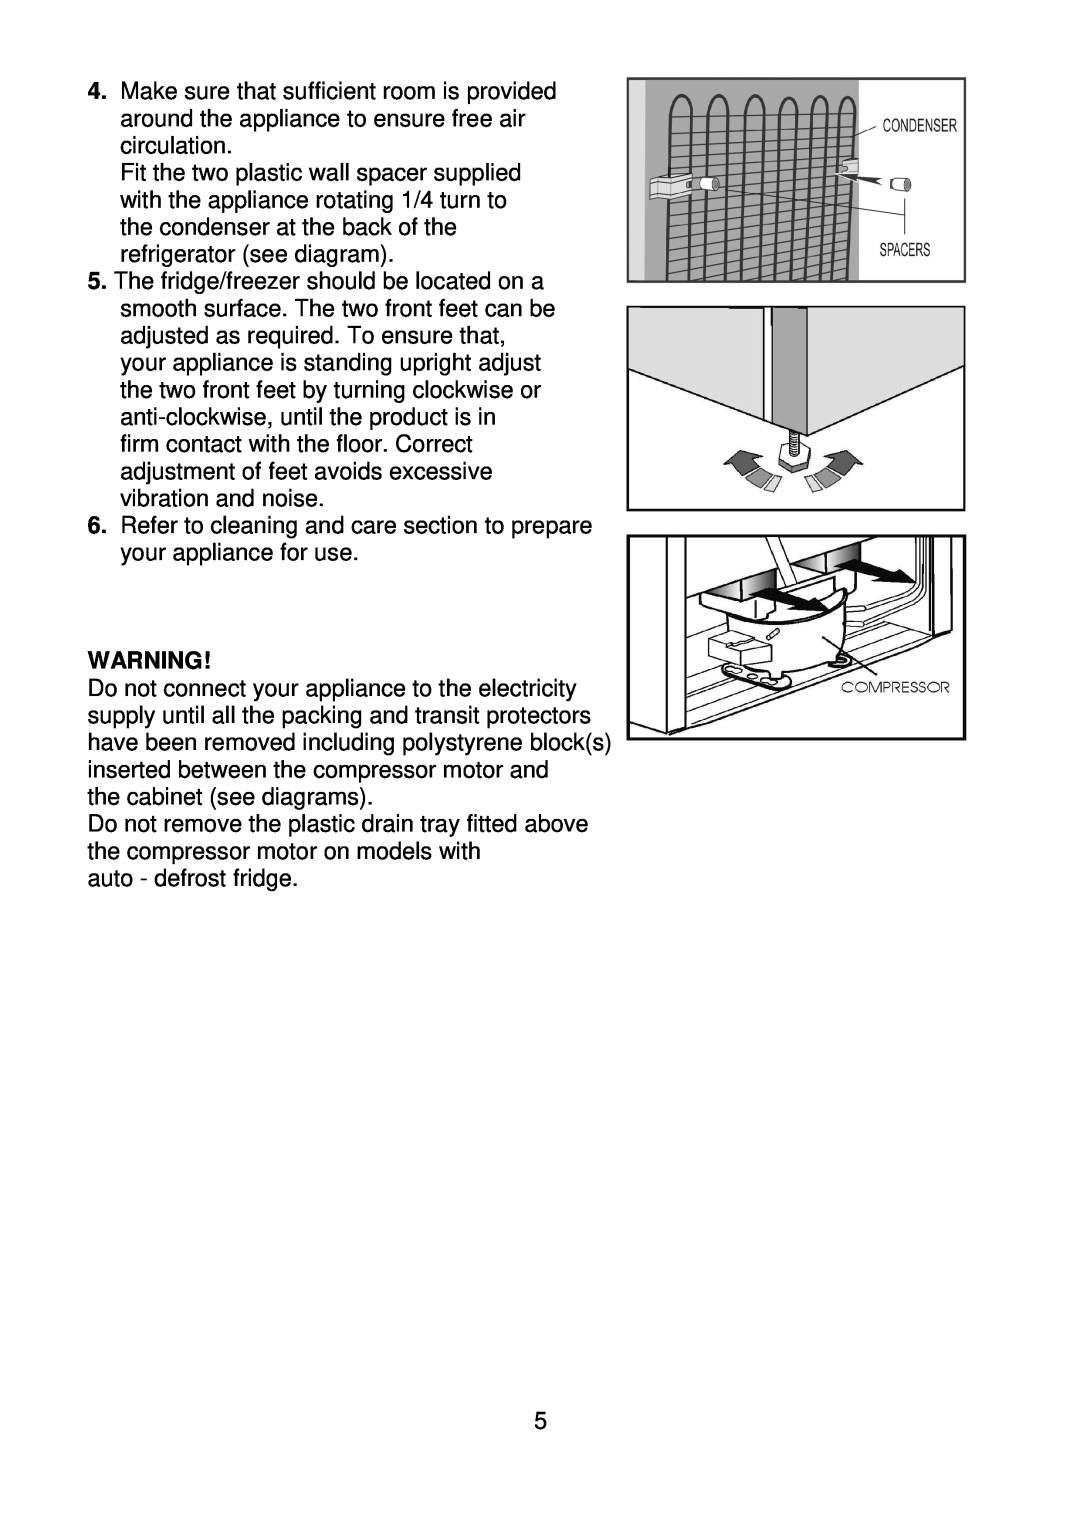 Beko CDA671F installation instructions the cabinet see diagrams, auto - defrost fridge 